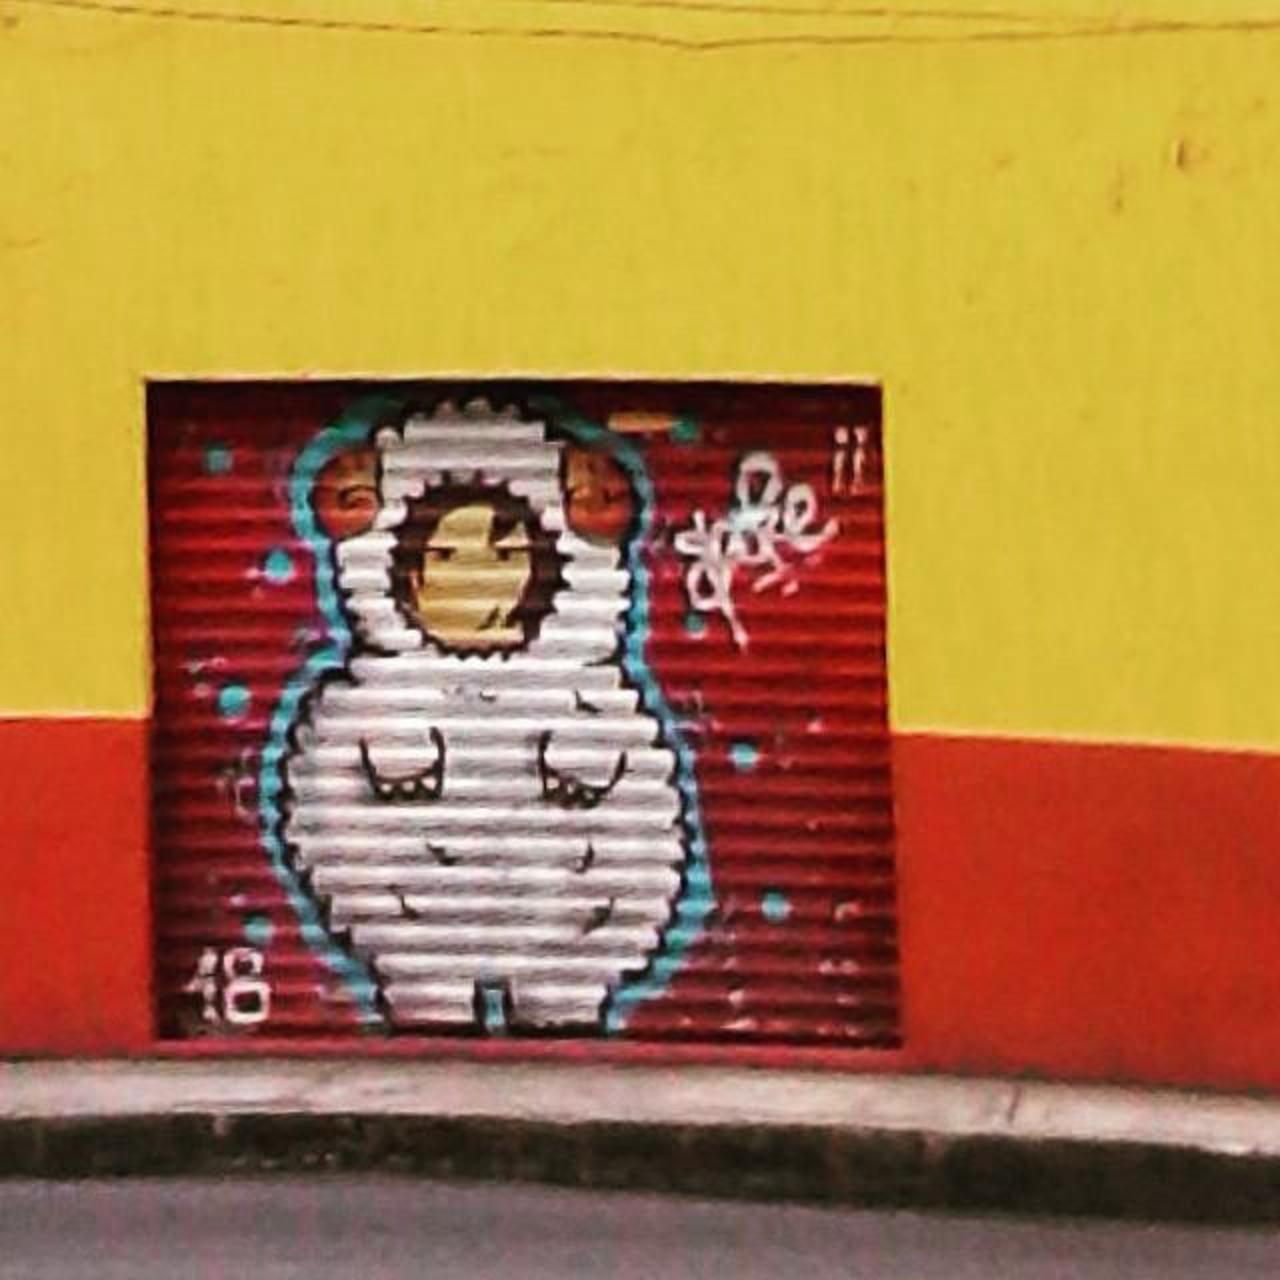 #Mexico #MexicoCity #StreetArt #Graffiti #StreetArtMexico #Urban #Art #Mural #Architecture #Wall #Steel #Door #Side… http://t.co/VYwb56DxOf